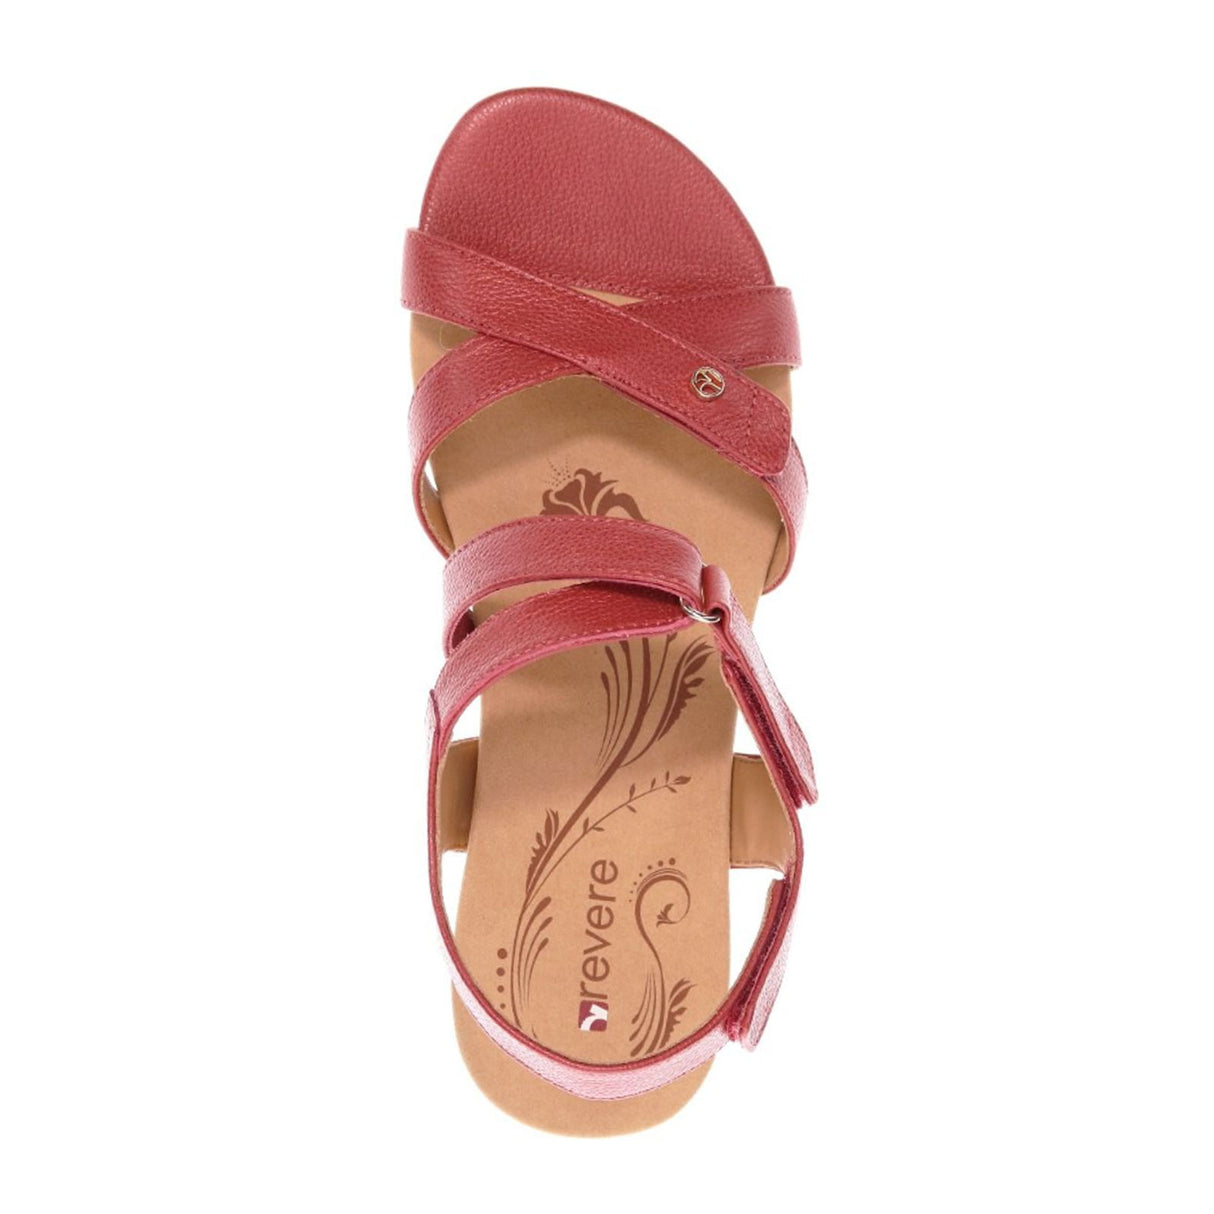 Revere Casablanca Wedge Sandal (Women) - Ruby Metallic Sandals - Wedge - The Heel Shoe Fitters